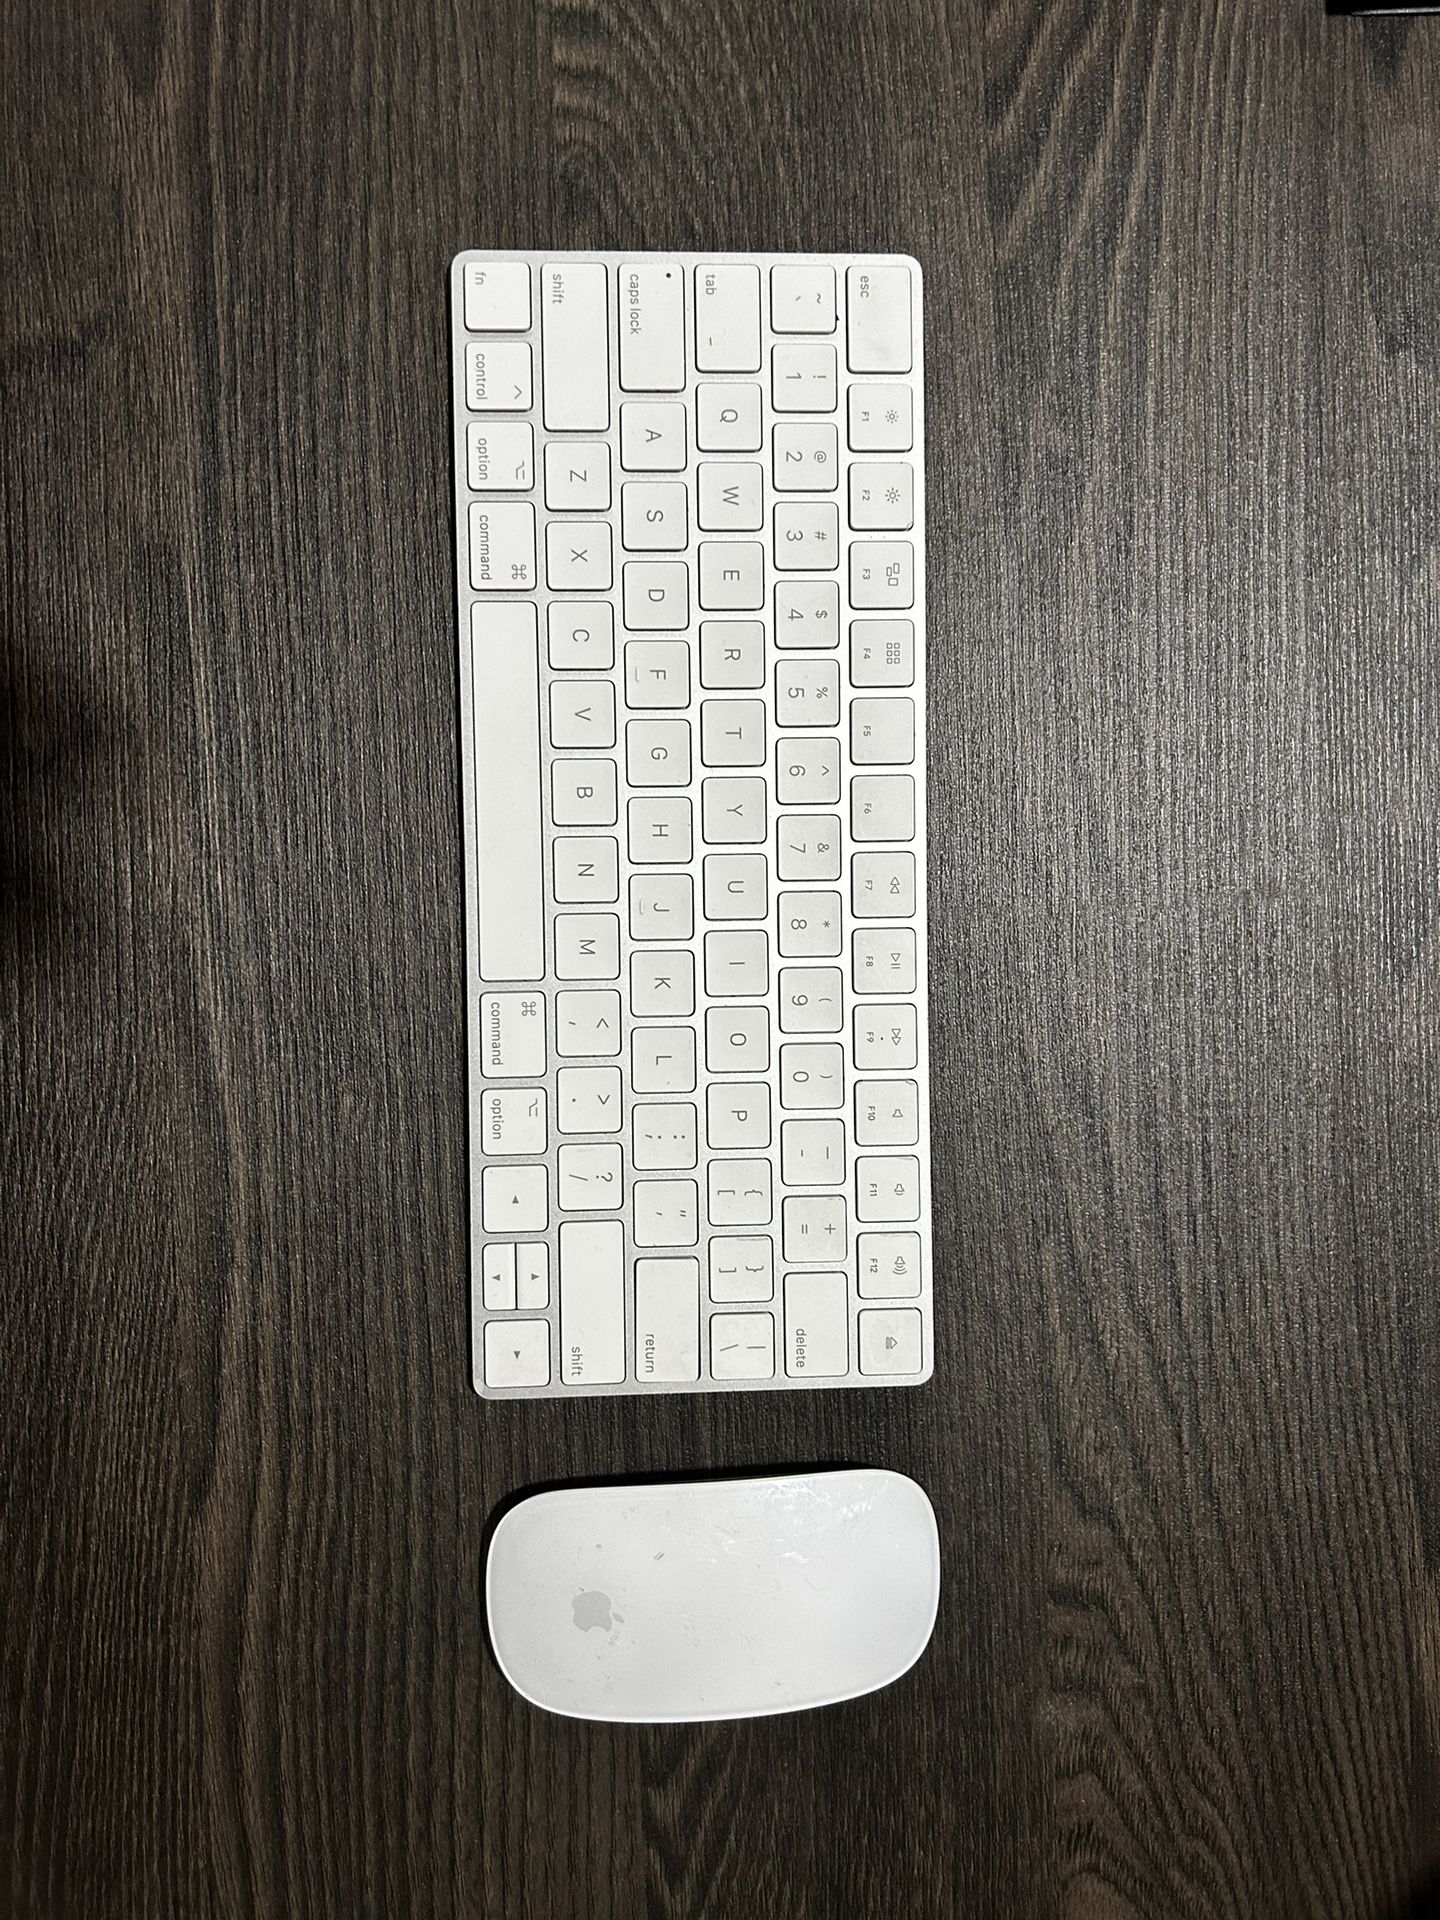 Apple Magic Mouse & Keyboard $100